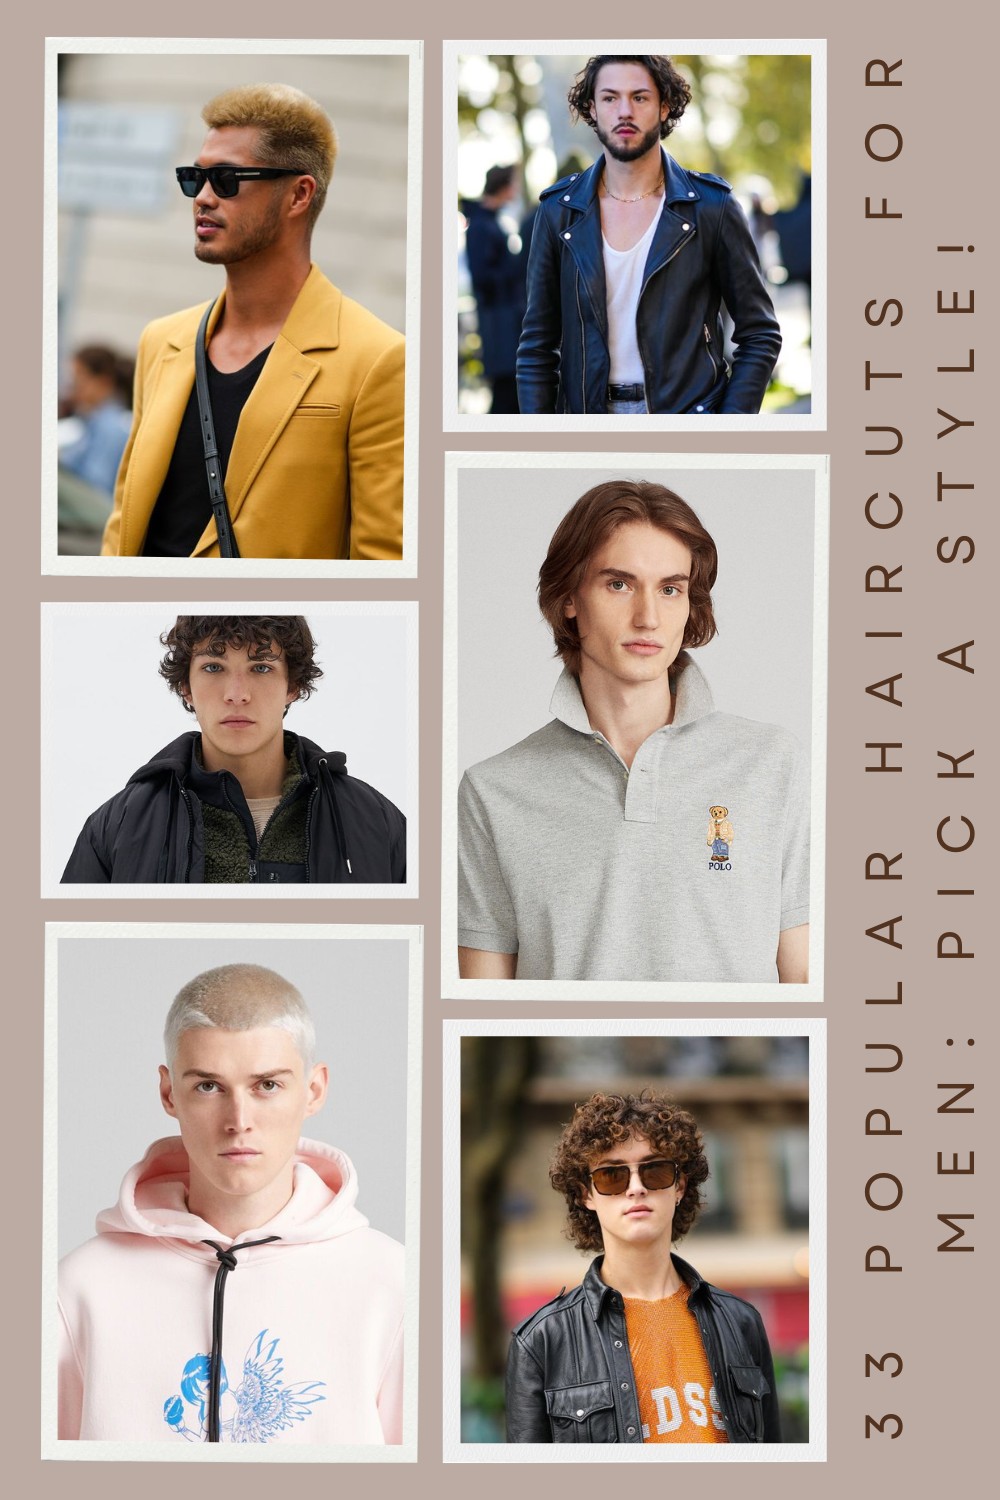 Trendy men's hairstyles